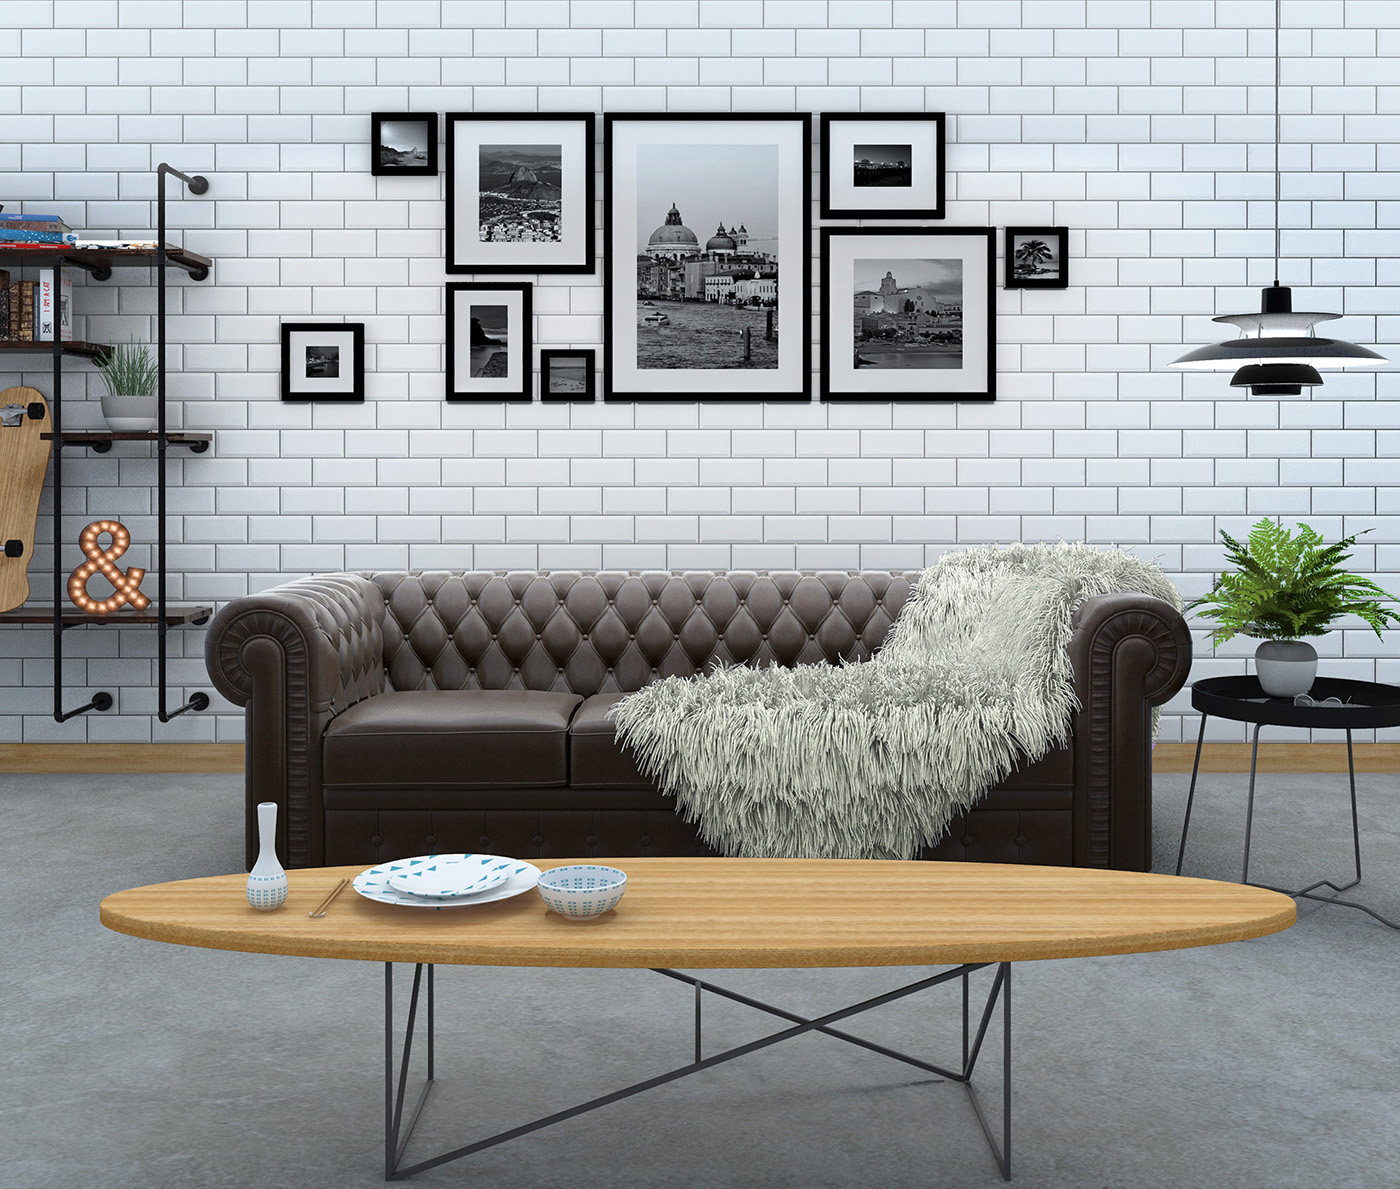 chesterfield architecture interiordesign furniture Style homedeco living room fur blanket Lamp alvarodelacruz